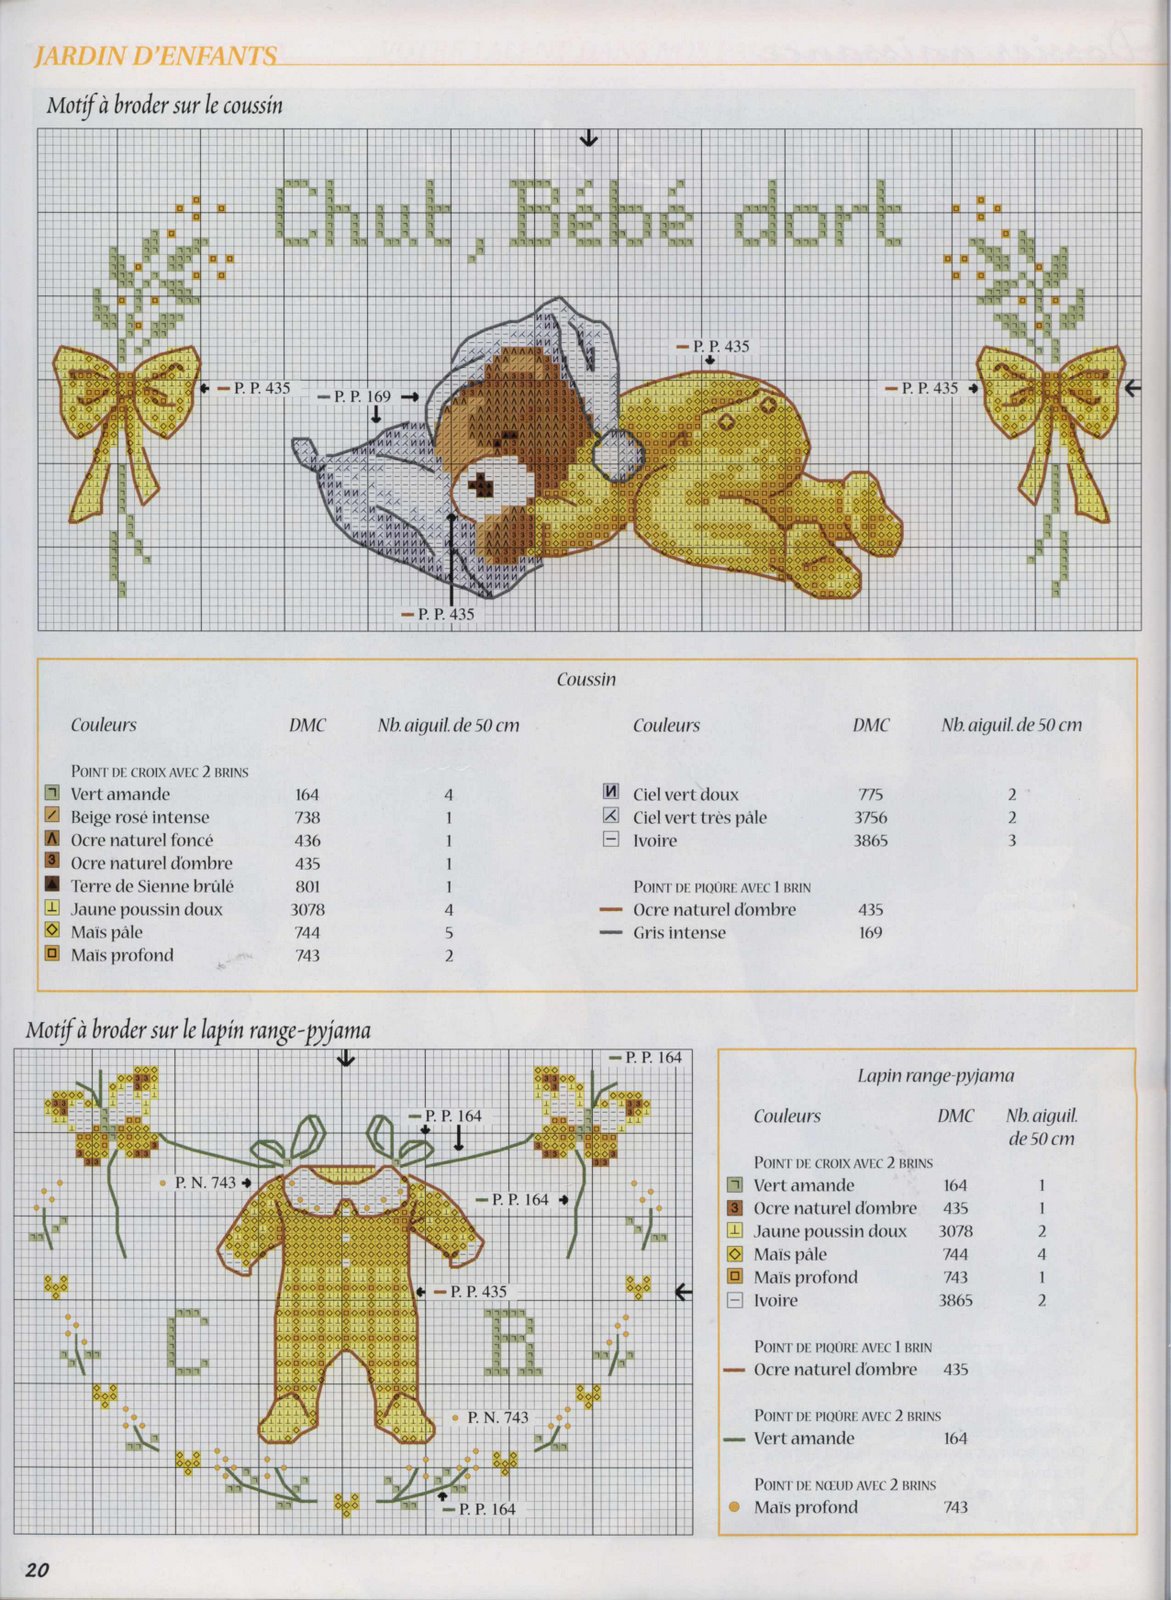 Cross stitch teddy bear sleeping with pajamas